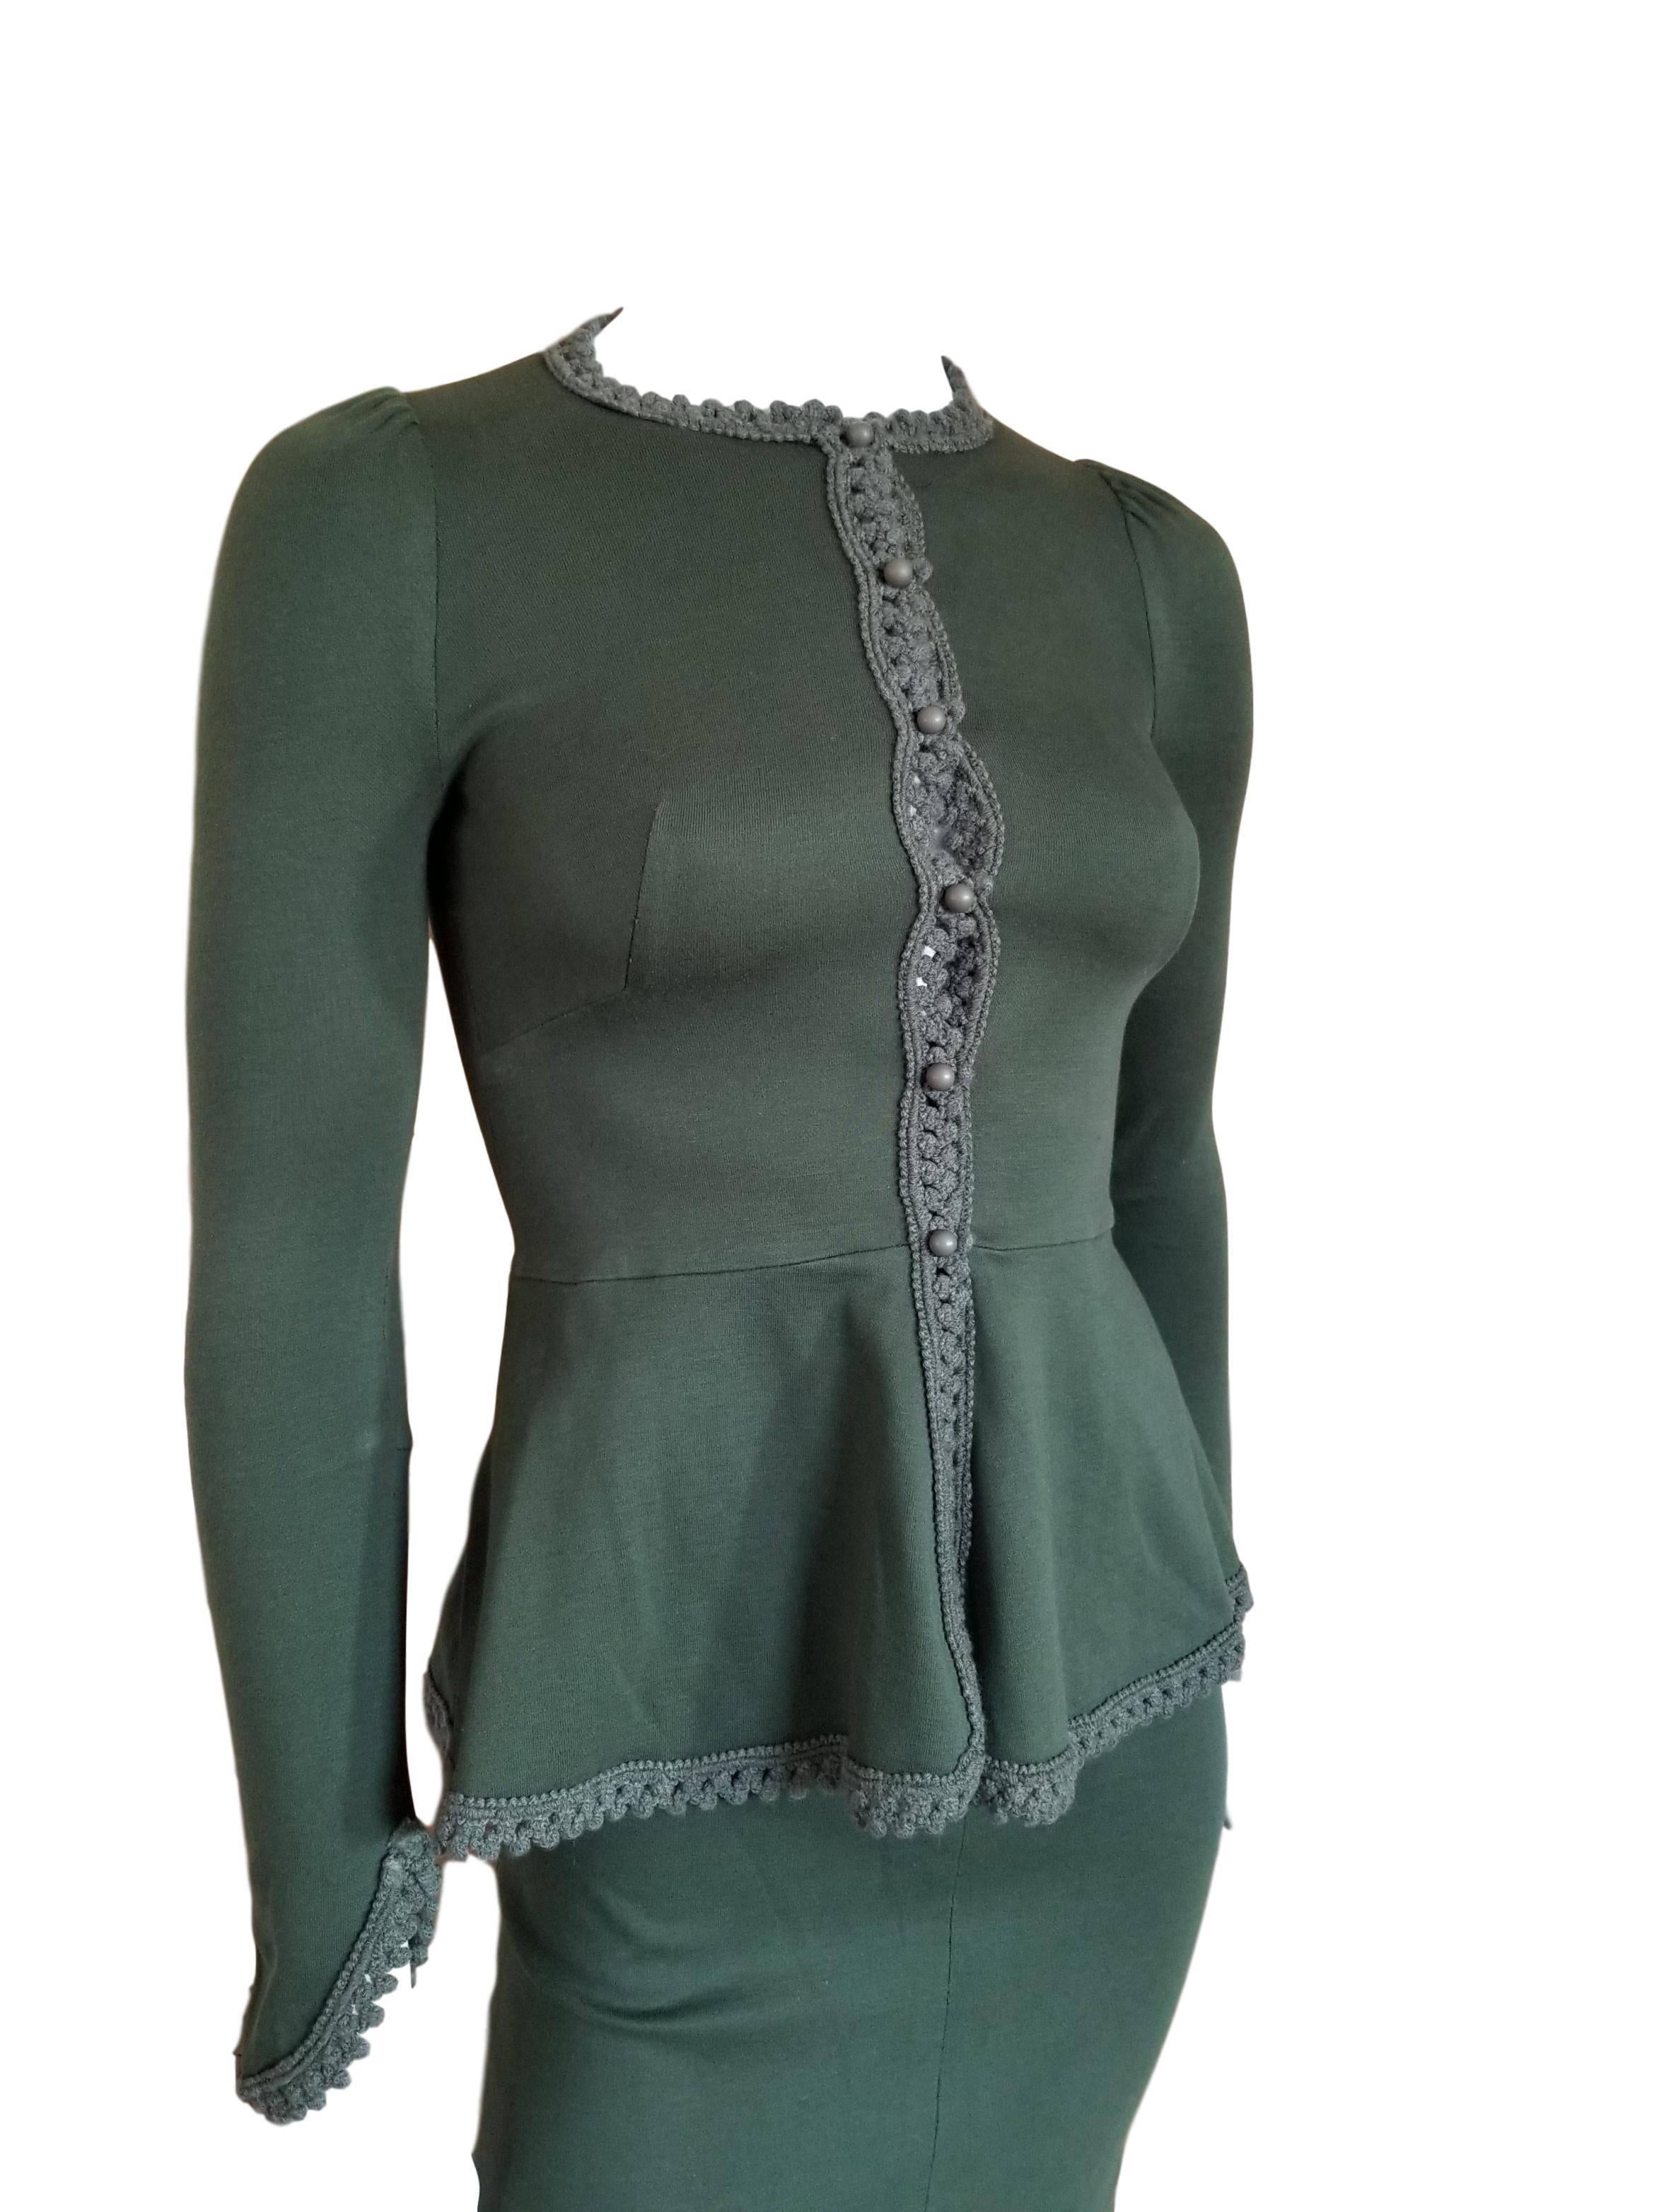 Black Biba 1960s British Green Edwardian Style Cotton 2 Piece Skirt Suit